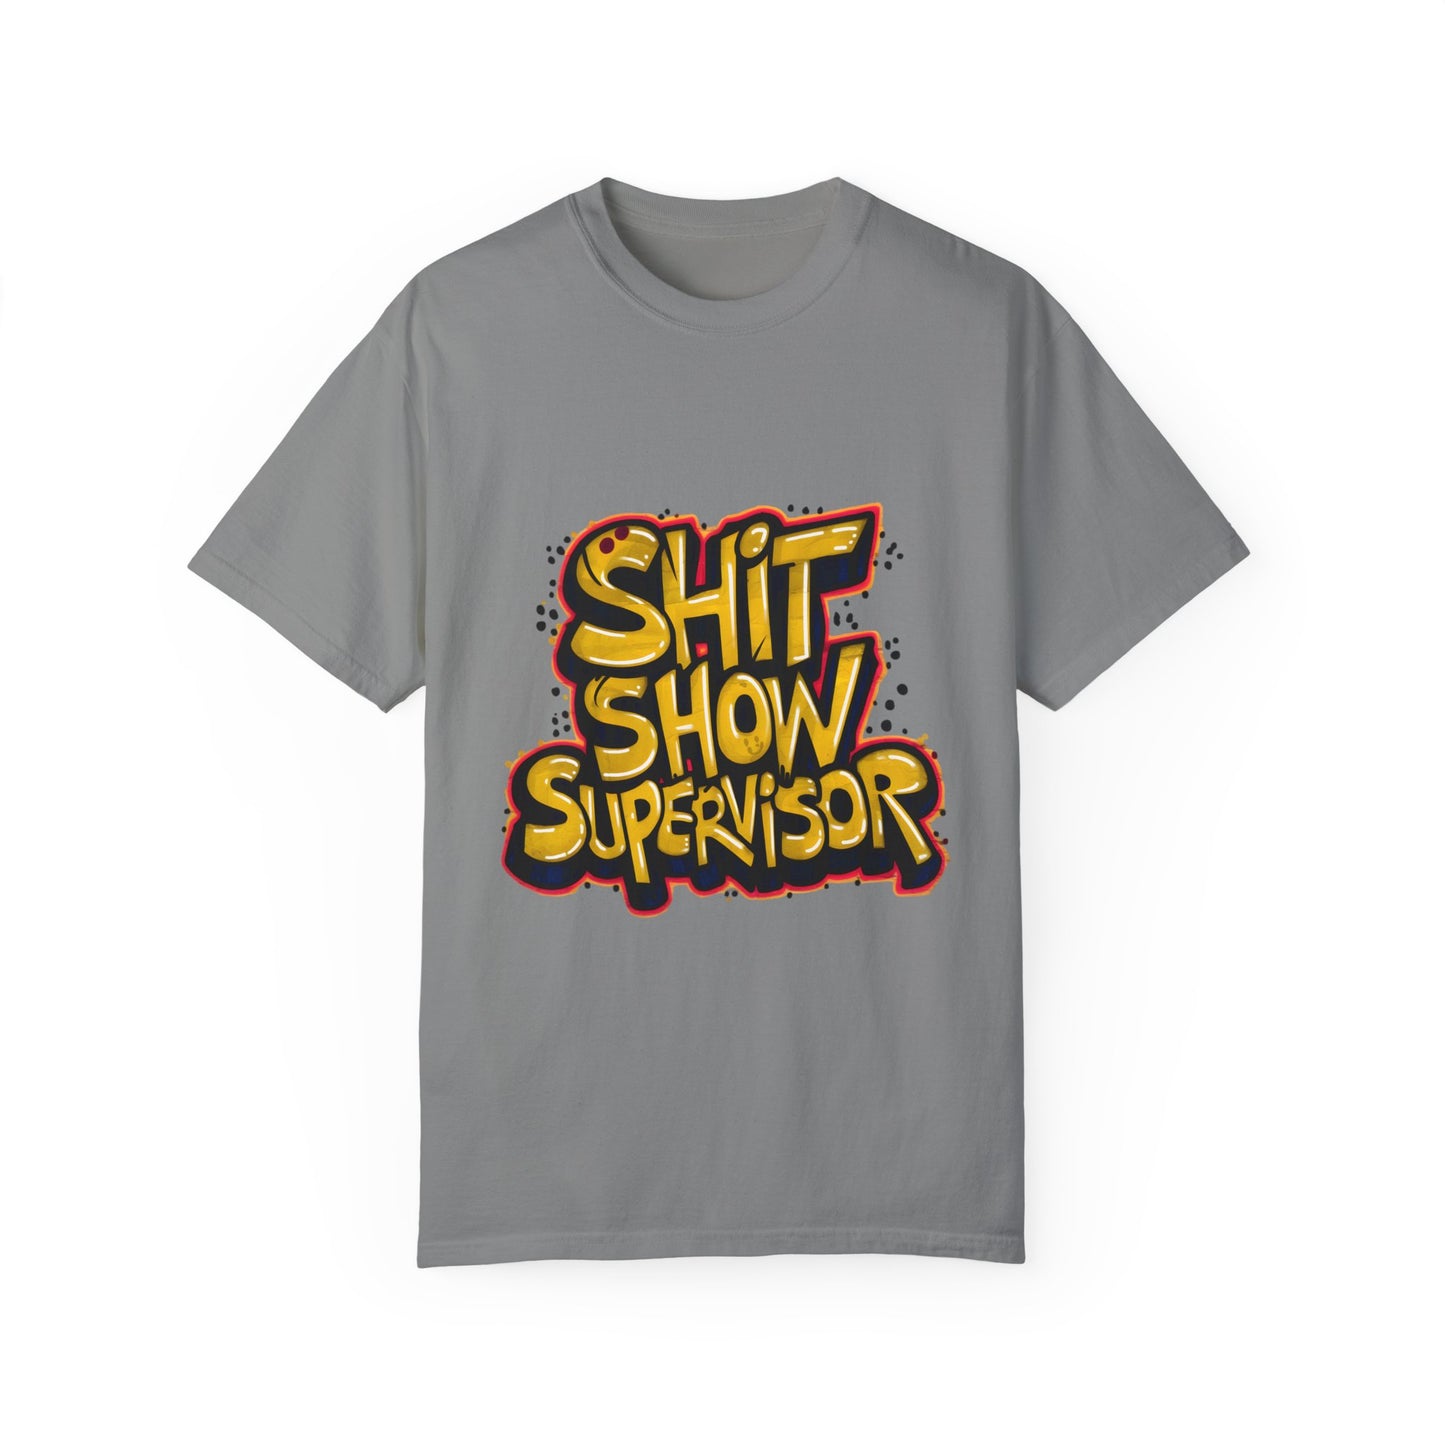 Shit Show Supervisor Urban Sarcastic Graphic Unisex Garment Dyed T-shirt Cotton Funny Humorous Graphic Soft Premium Unisex Men Women Granite T-shirt Birthday Gift-4